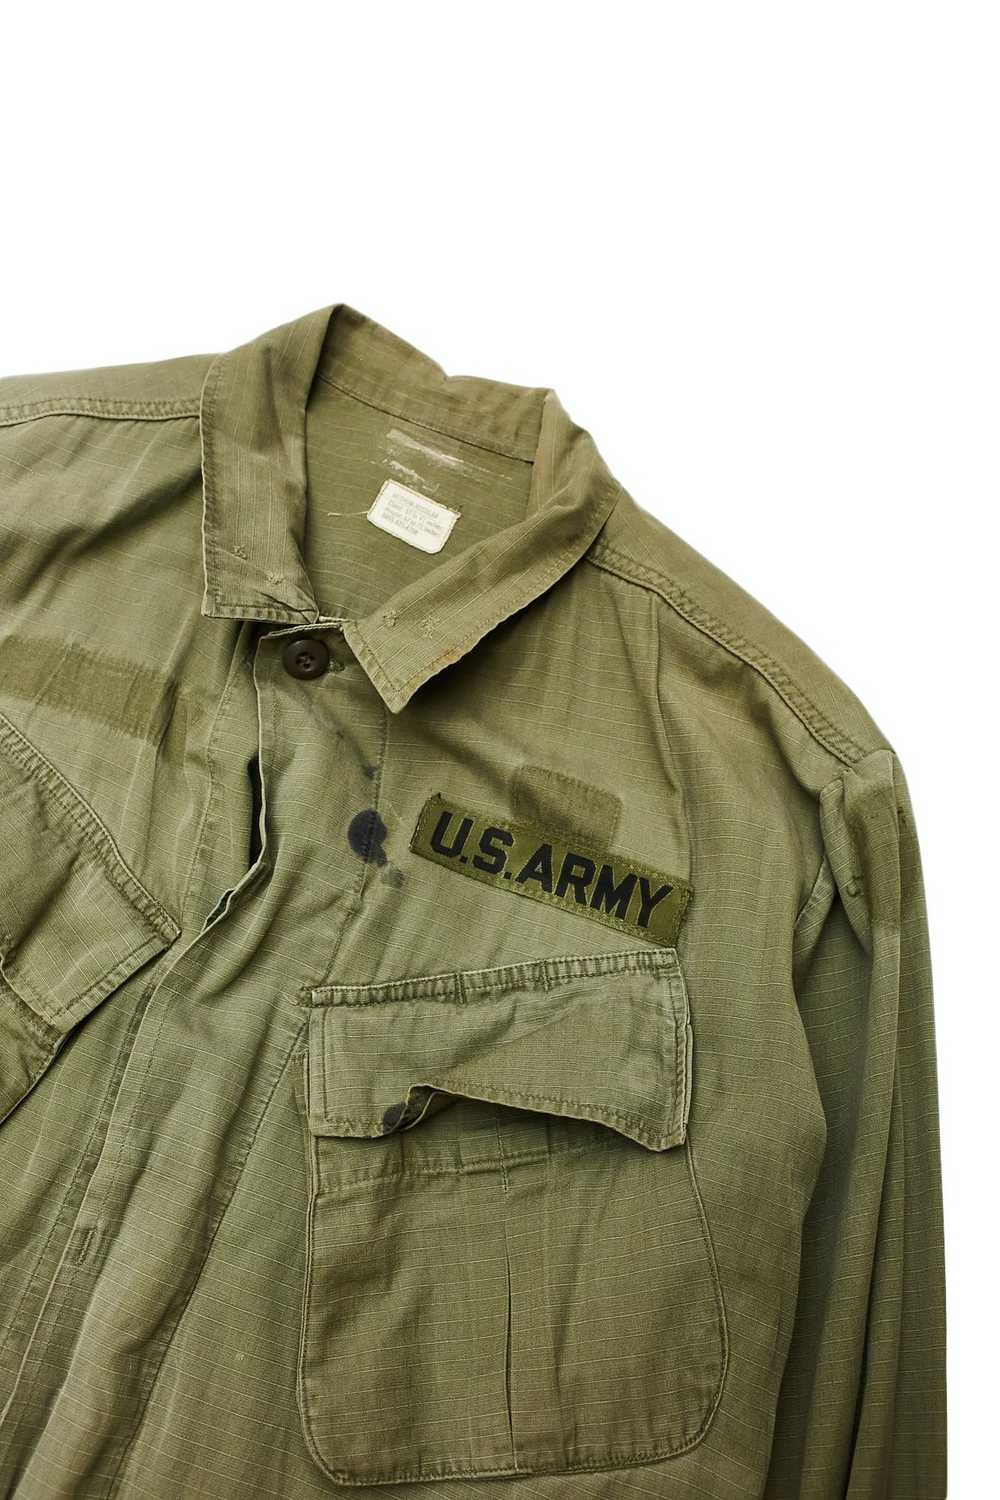 Military 70's Jungle Jacket - image 4